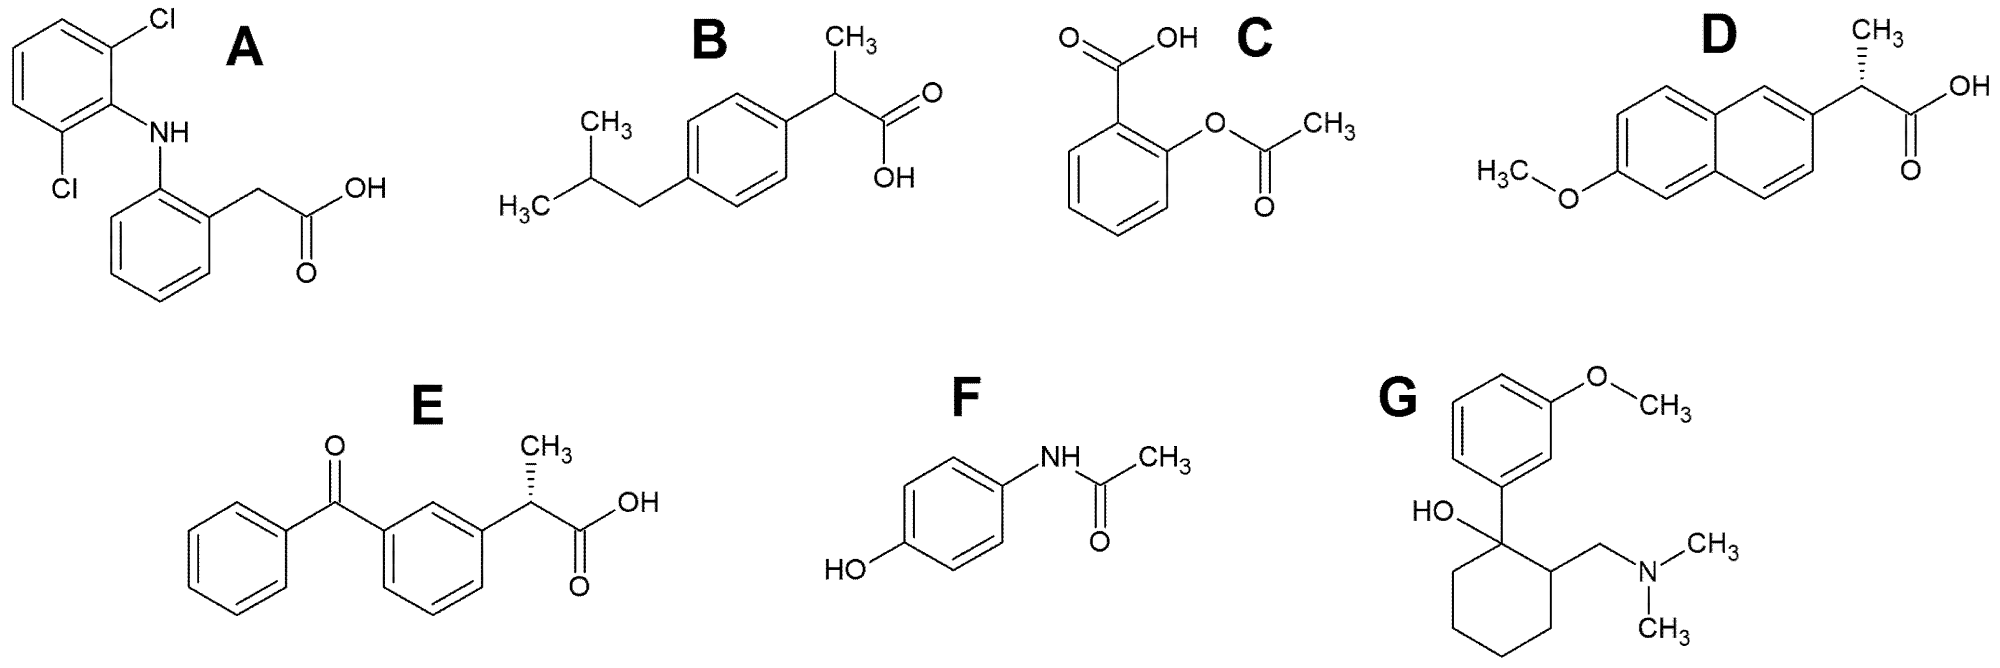 The structural formulas of diclofenac (A), ibuprofen (B), acetylsalicylic acid (C), naproxen (D), ketoprofen (E), paracetamol (F) and tramadol (G).